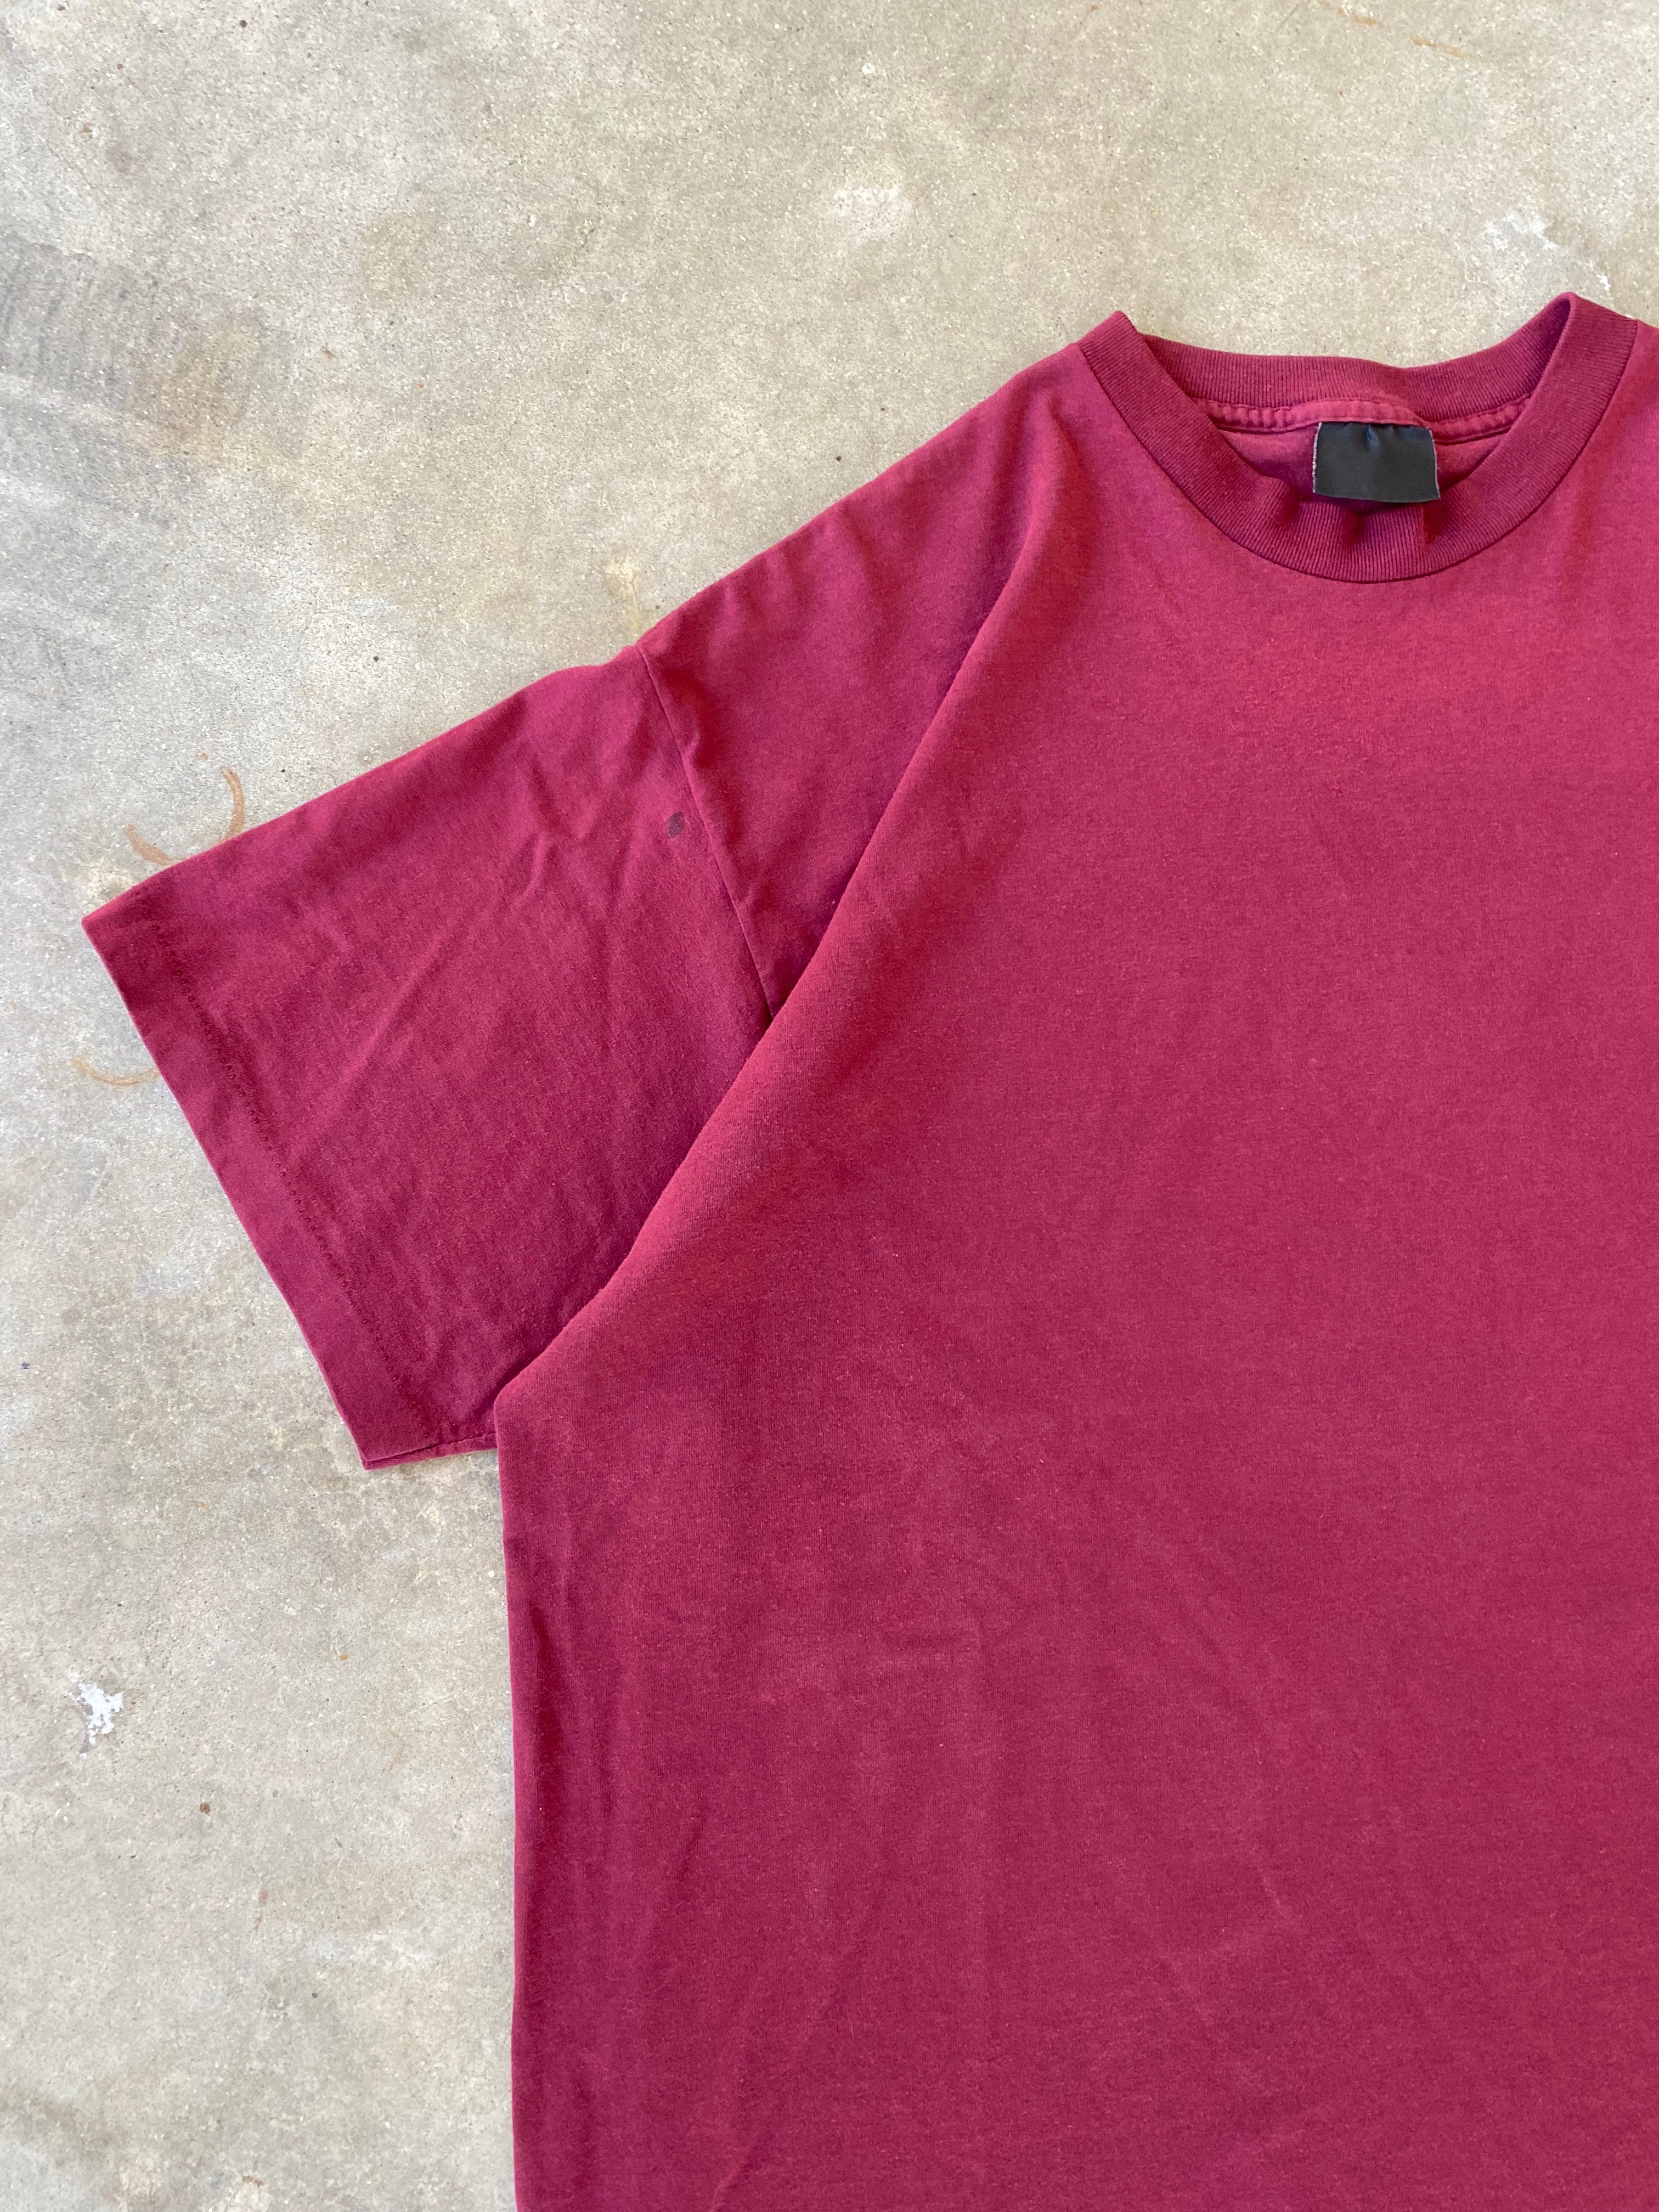 1990s Maroon Single Stitch Boxy T-Shirt (XXL)